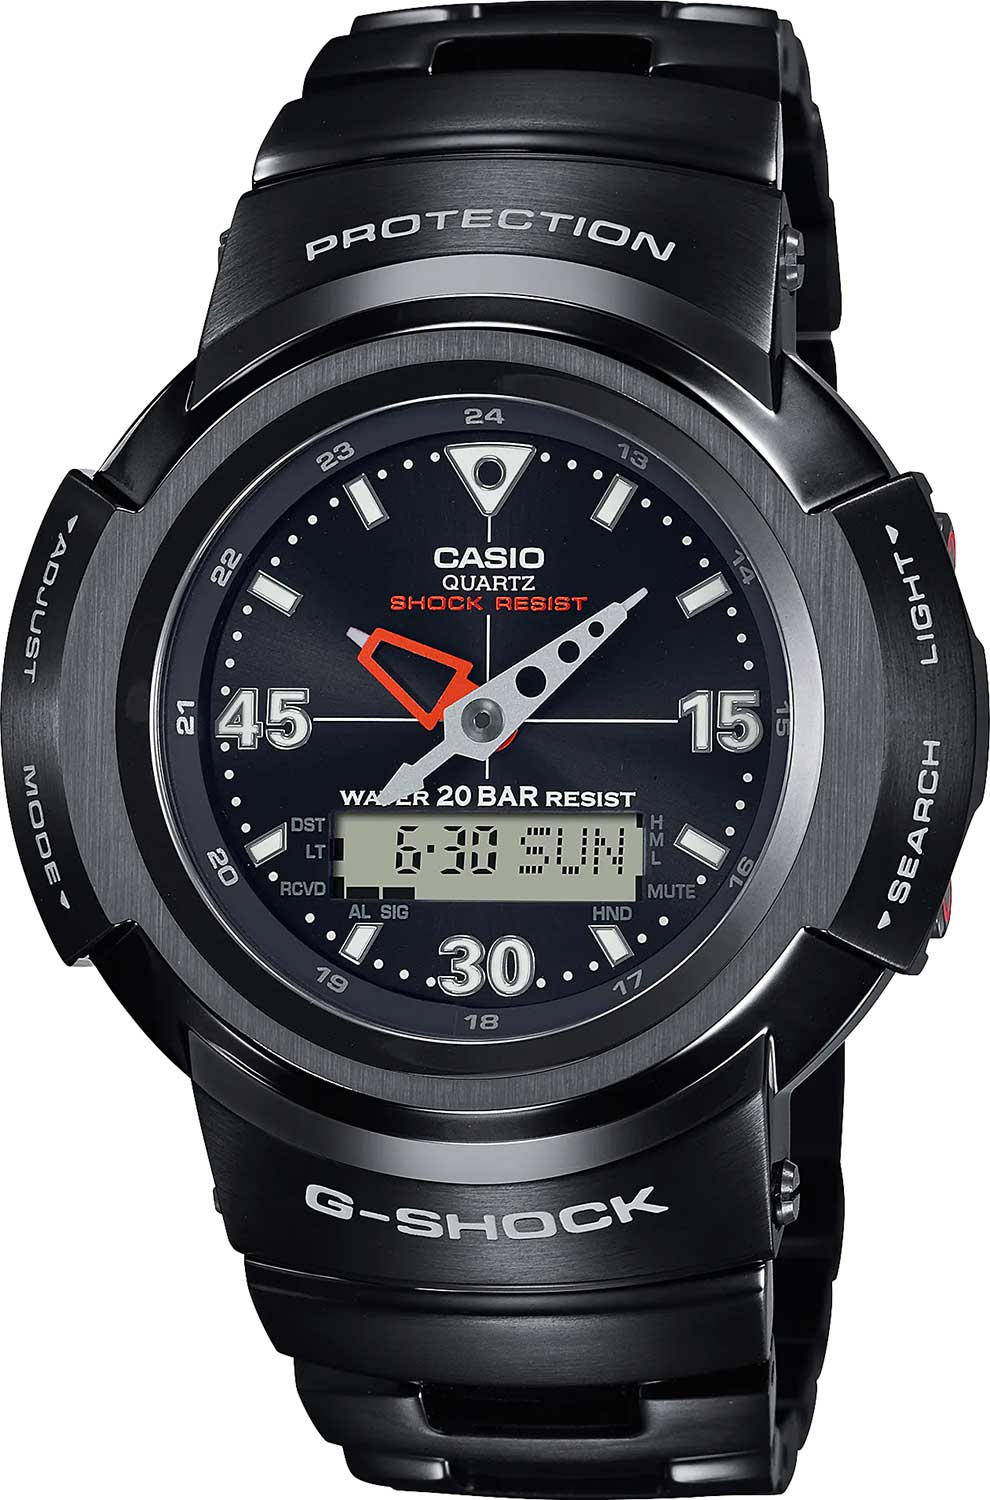    Casio G-SHOCK AWM-500-1A  